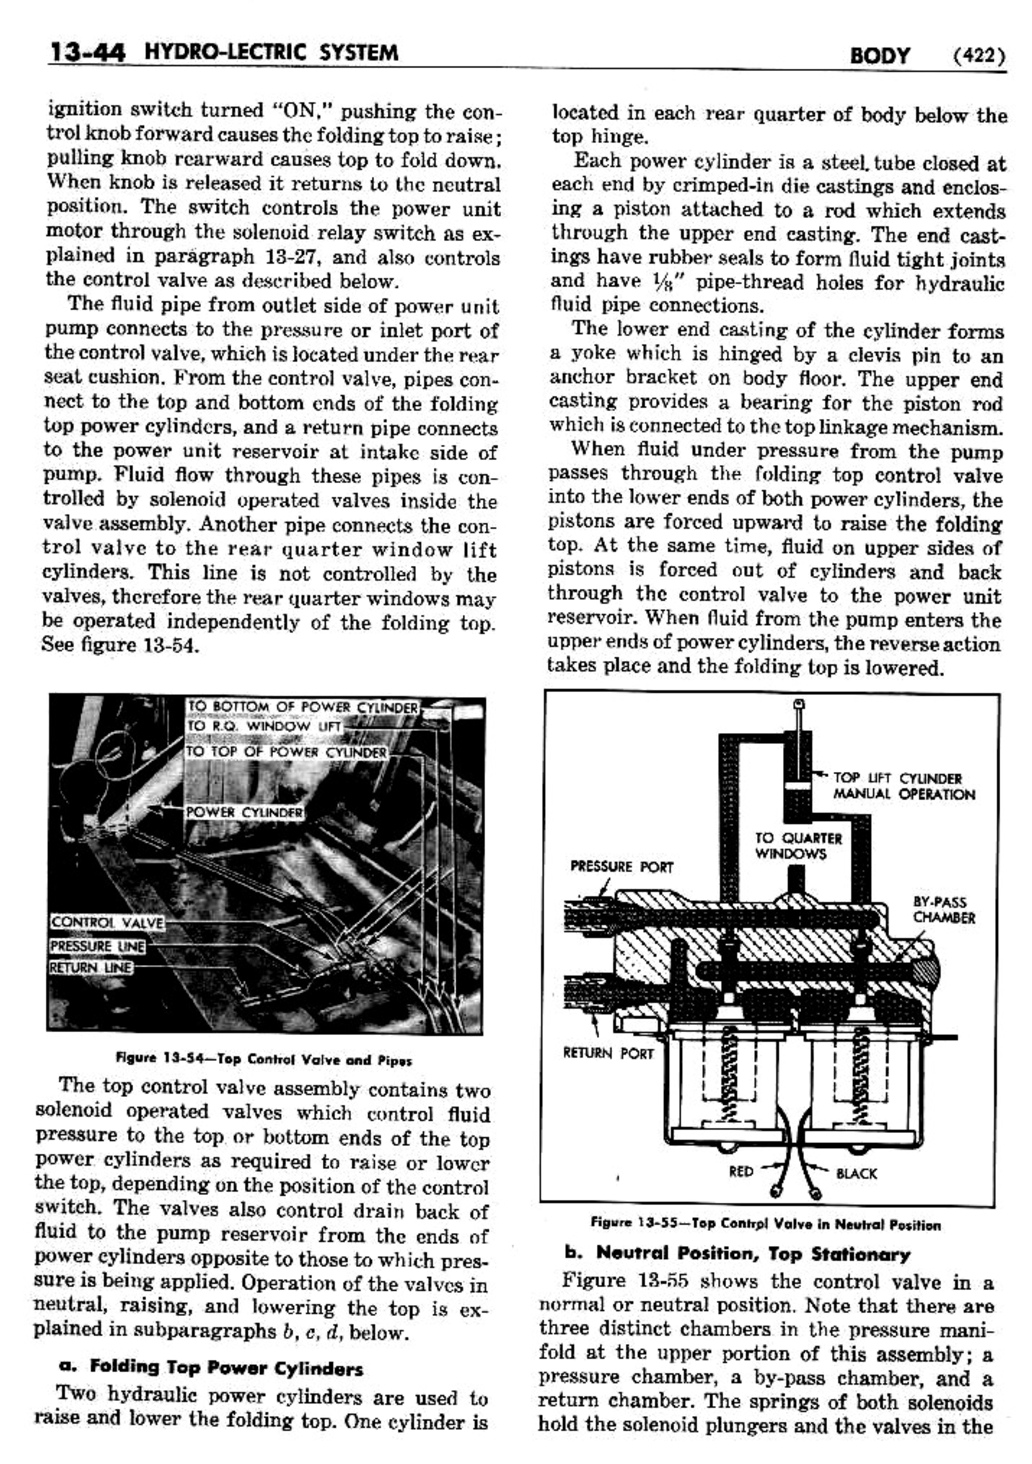 n_14 1950 Buick Shop Manual - Body-044-044.jpg